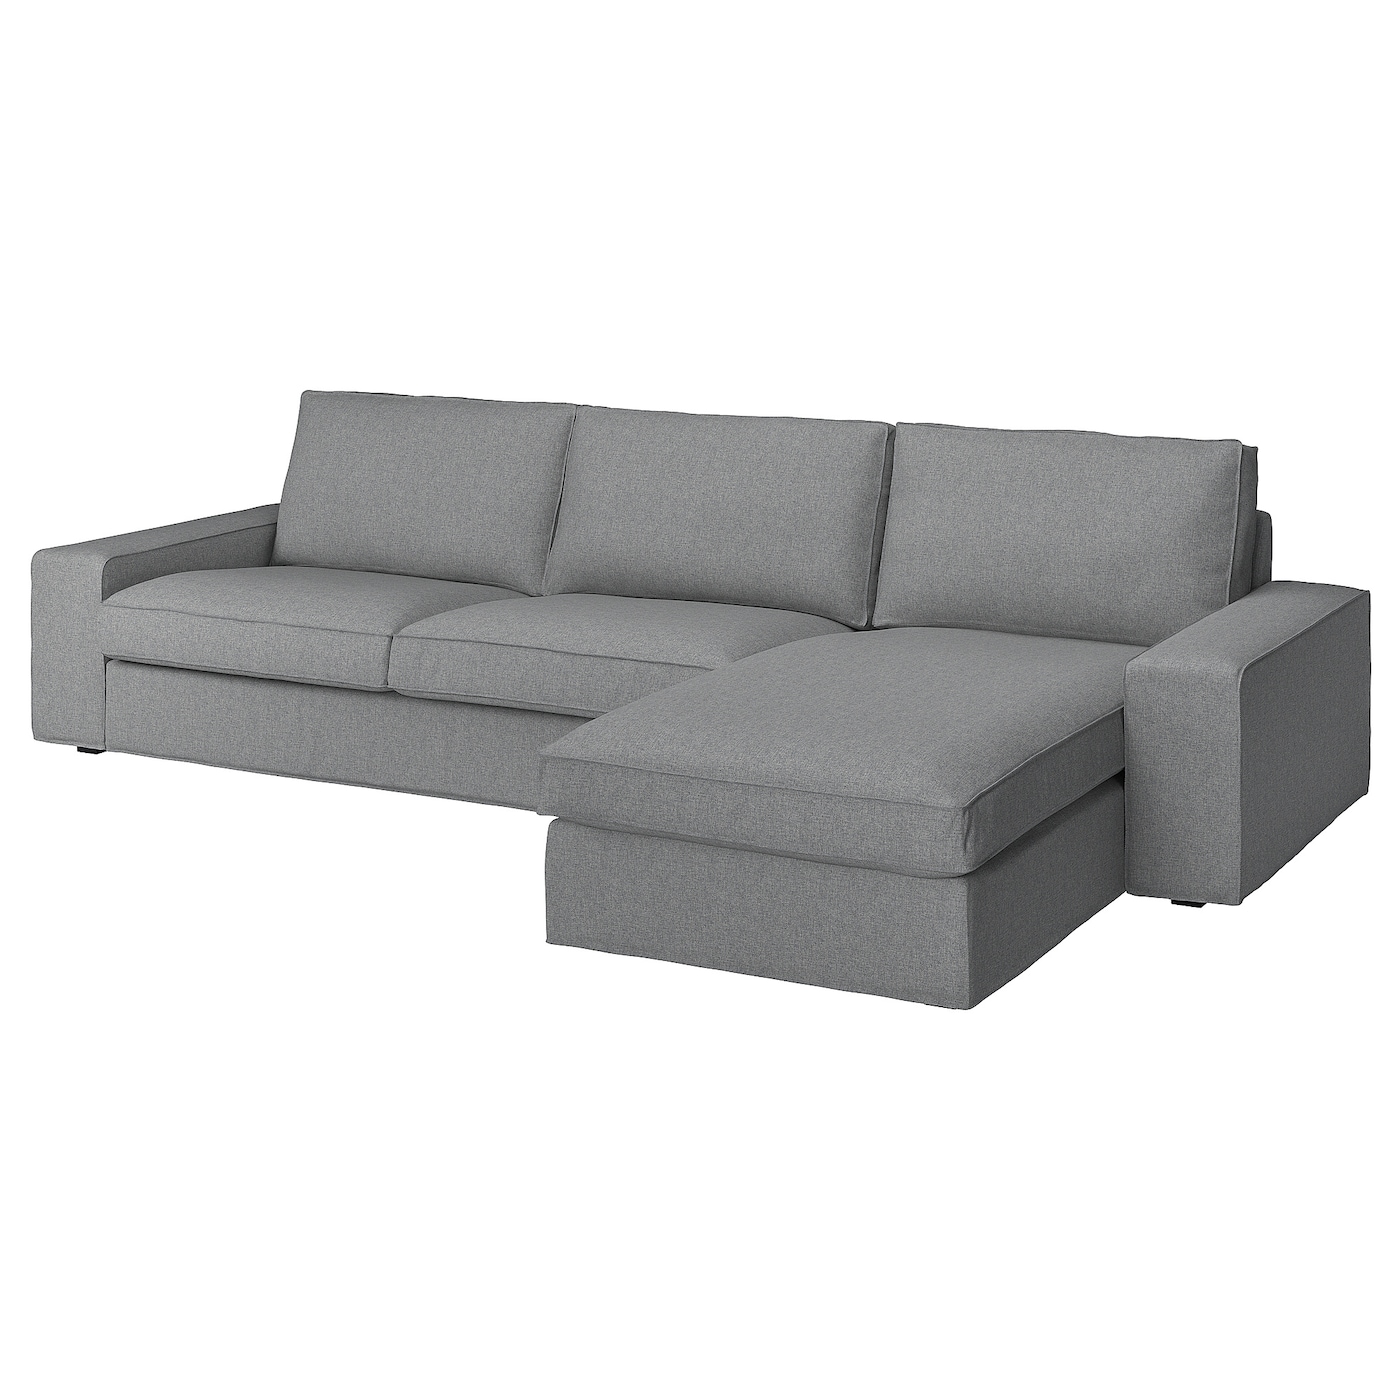 КИВИК 4-местный диван + диван, Тибблби бежевый/серый KIVIK IKEA чехол на 2 местный диван ikea kivik светло серый